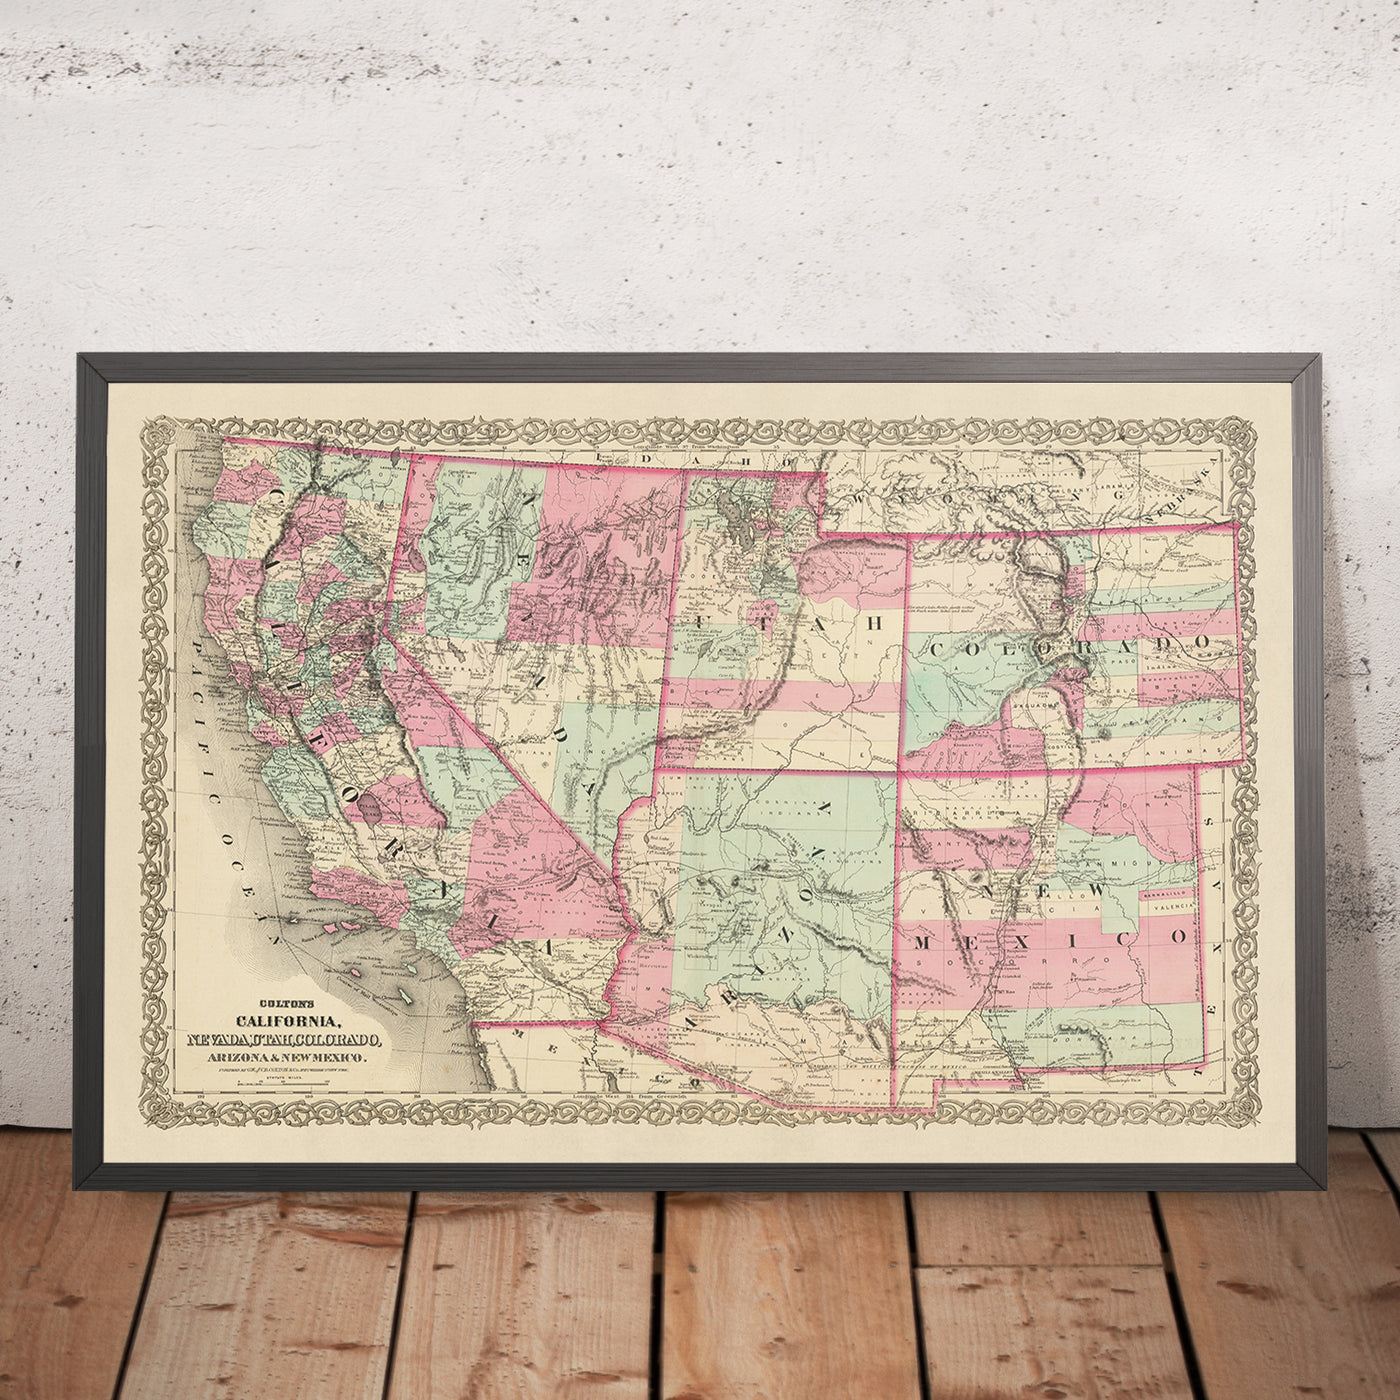 Old Map of Western United States by J.H. Colton, 1871: San Francisco, Salt Lake City, Denver, Tucson, and Santa Fe